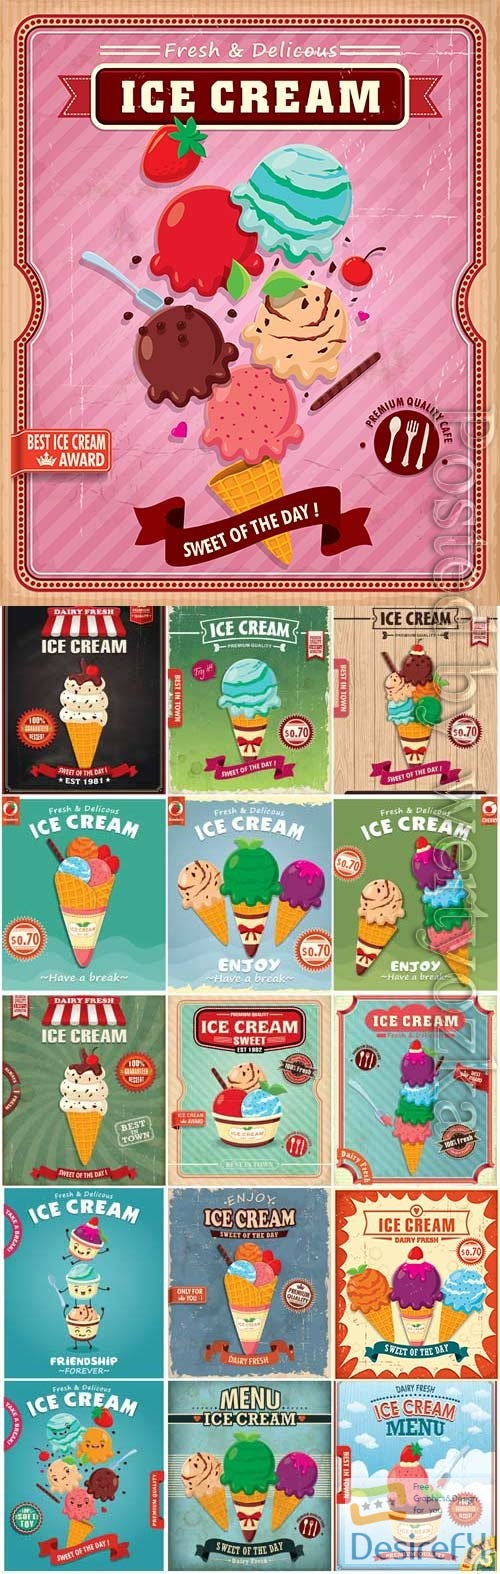 Ice cream advertising retro posters in vector